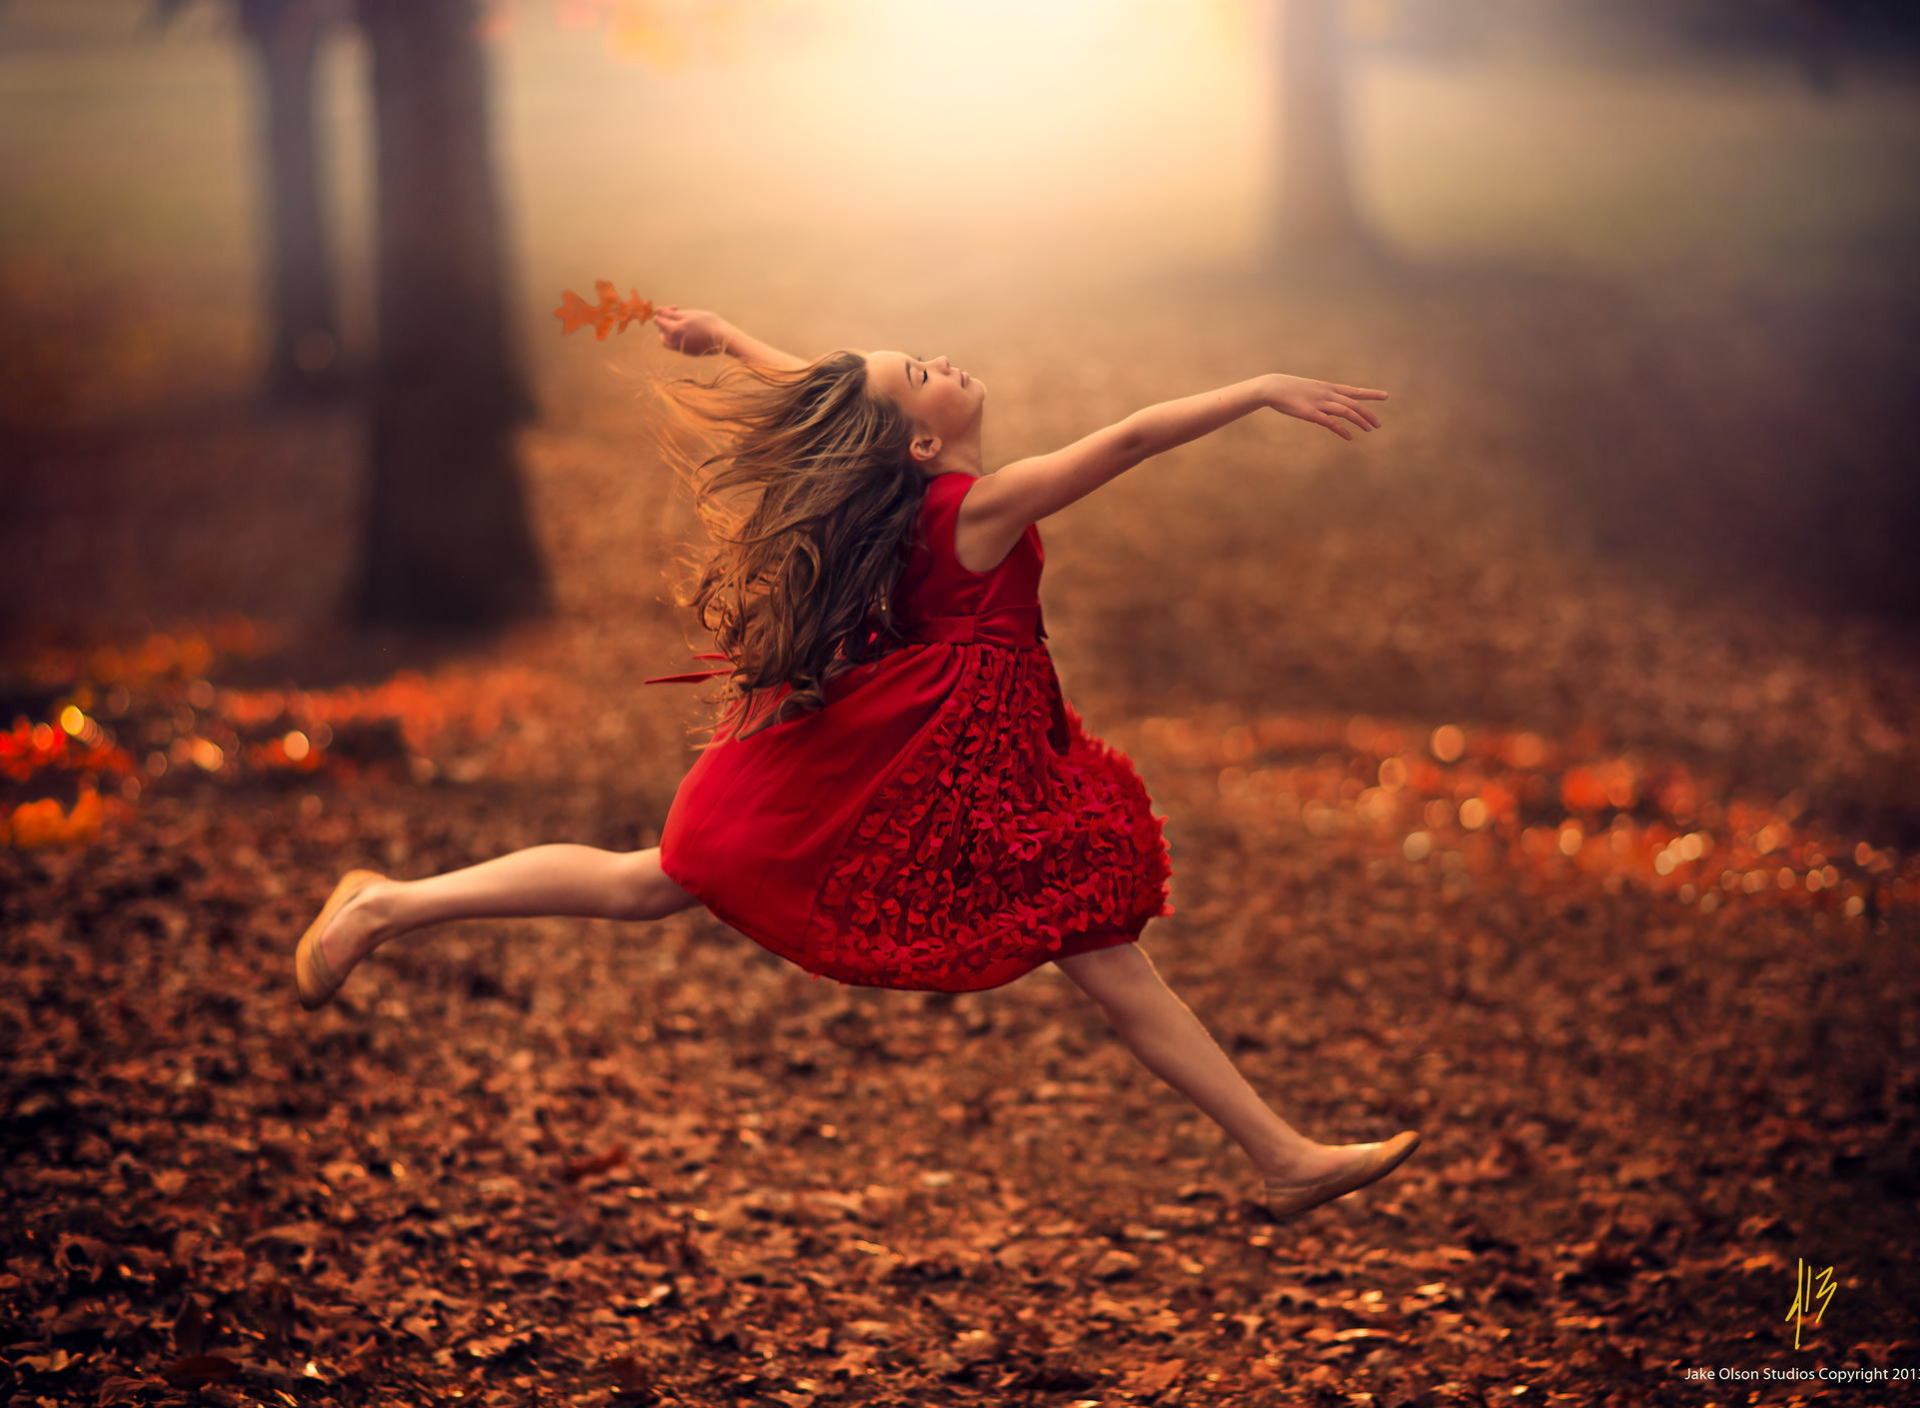 Женщины танцуют картинки. Джейк Олсон (Jake Olson), США. Девушка танцует. Девушка бежит в платье. Девушка танцует осень.